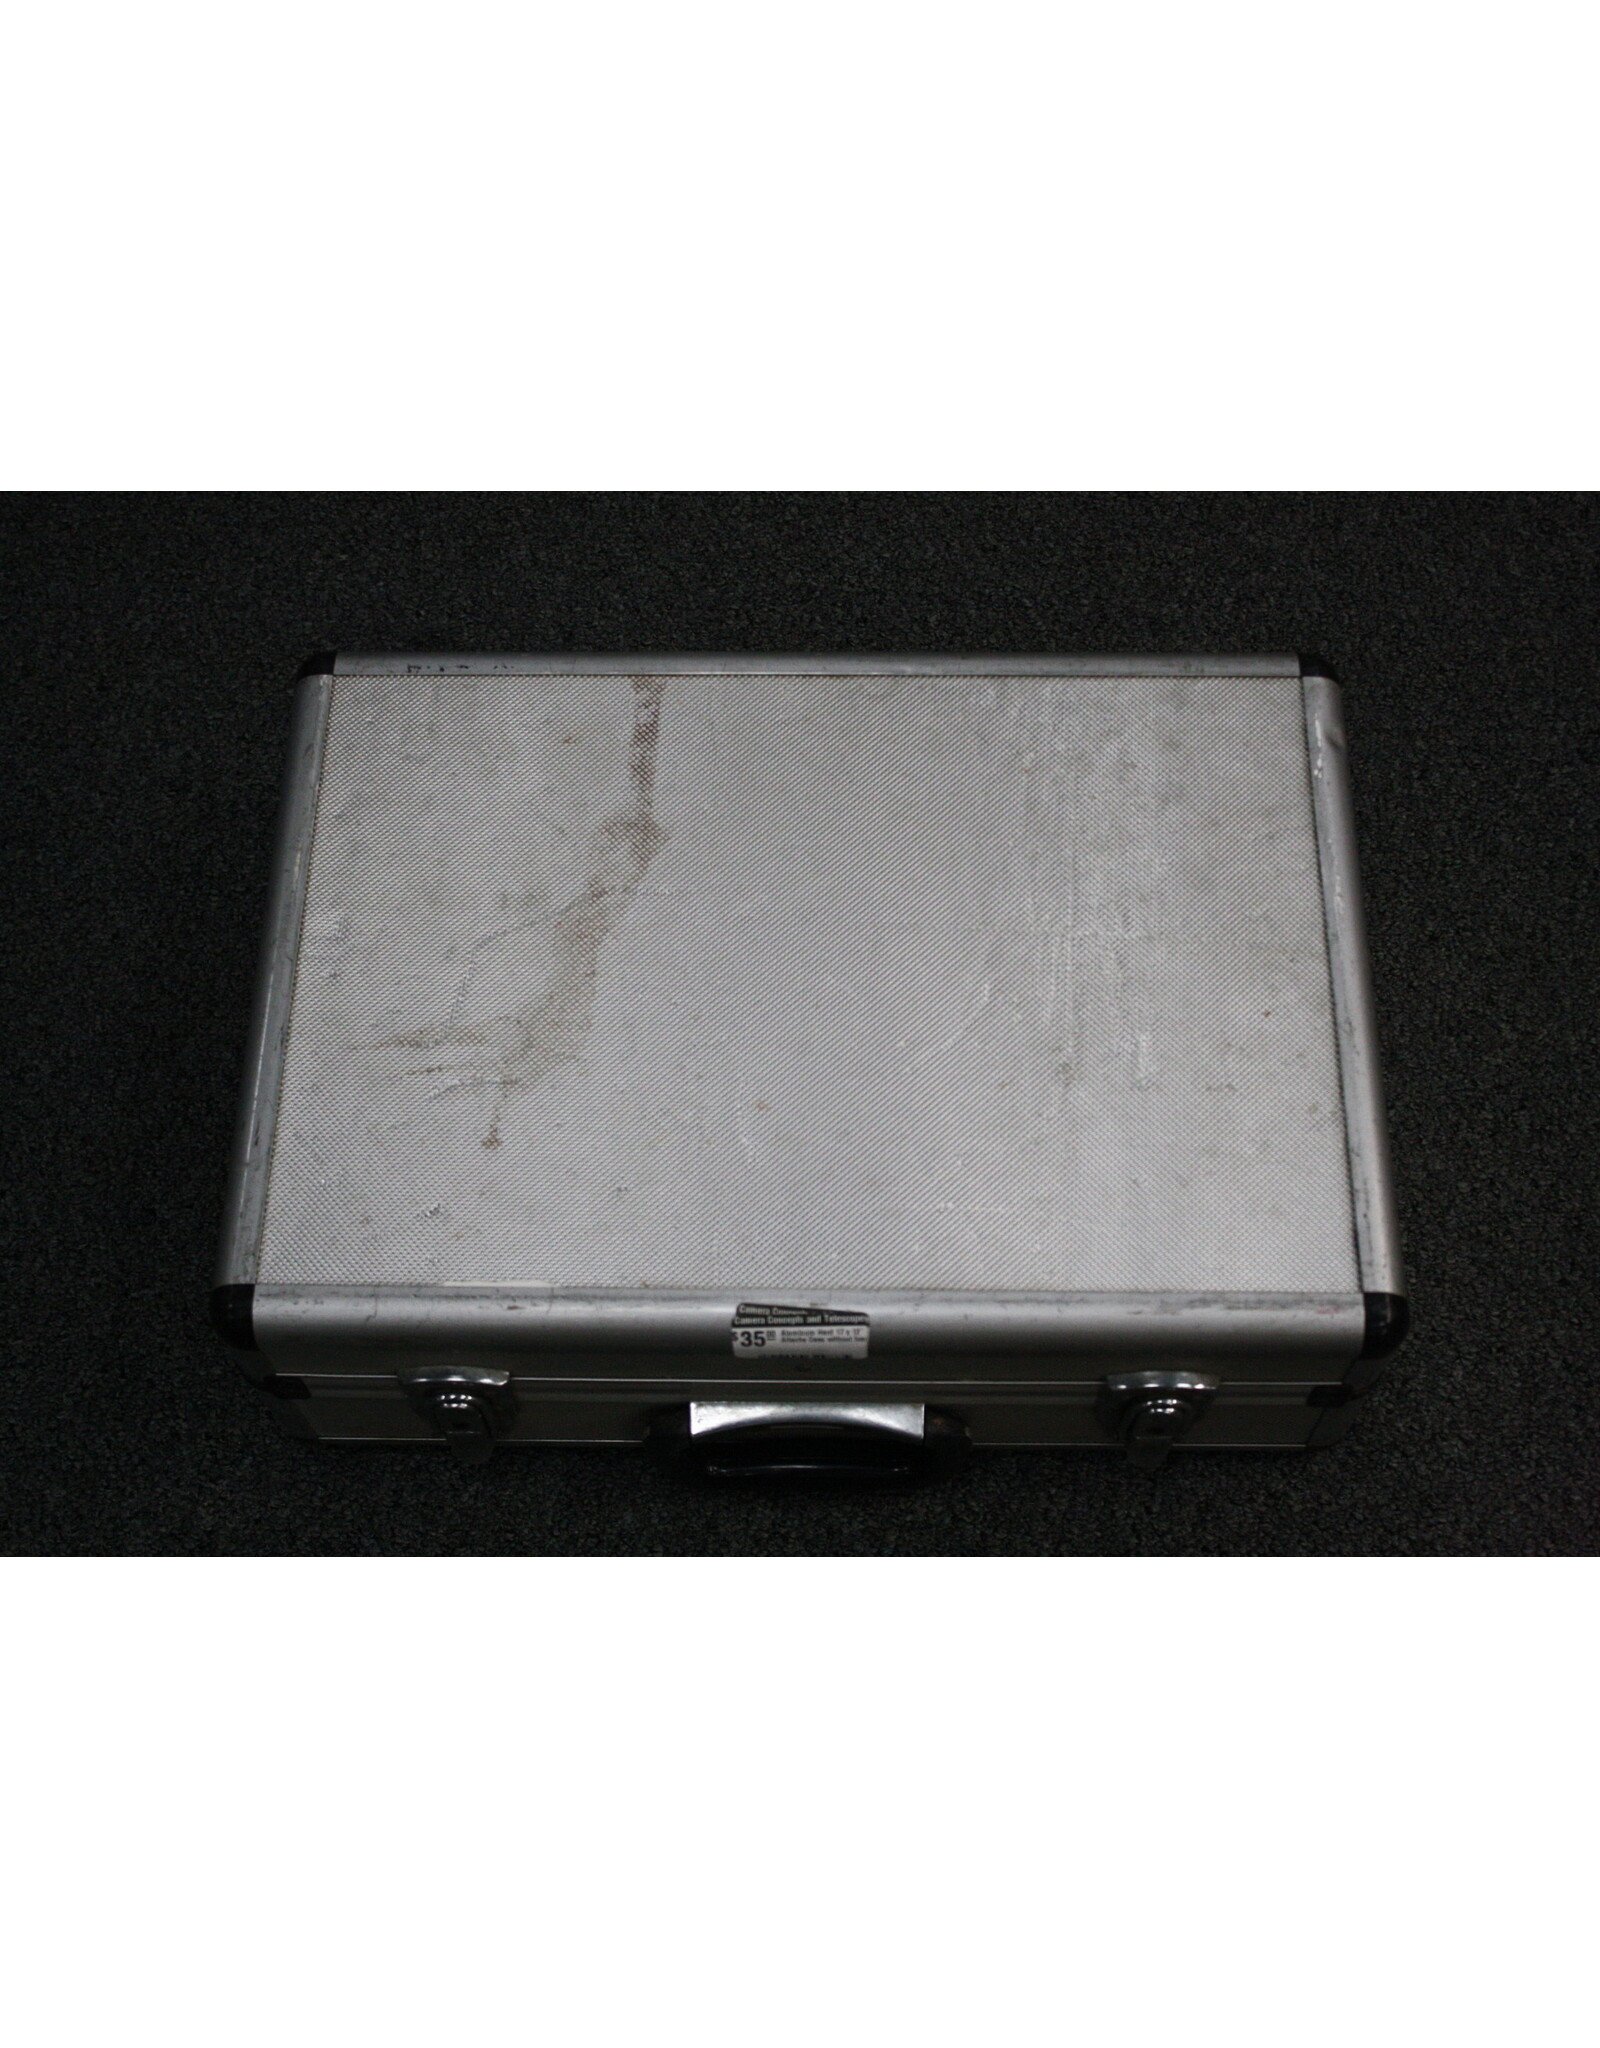 Aluminum Hard 17 x 12"  Attache Case without foam